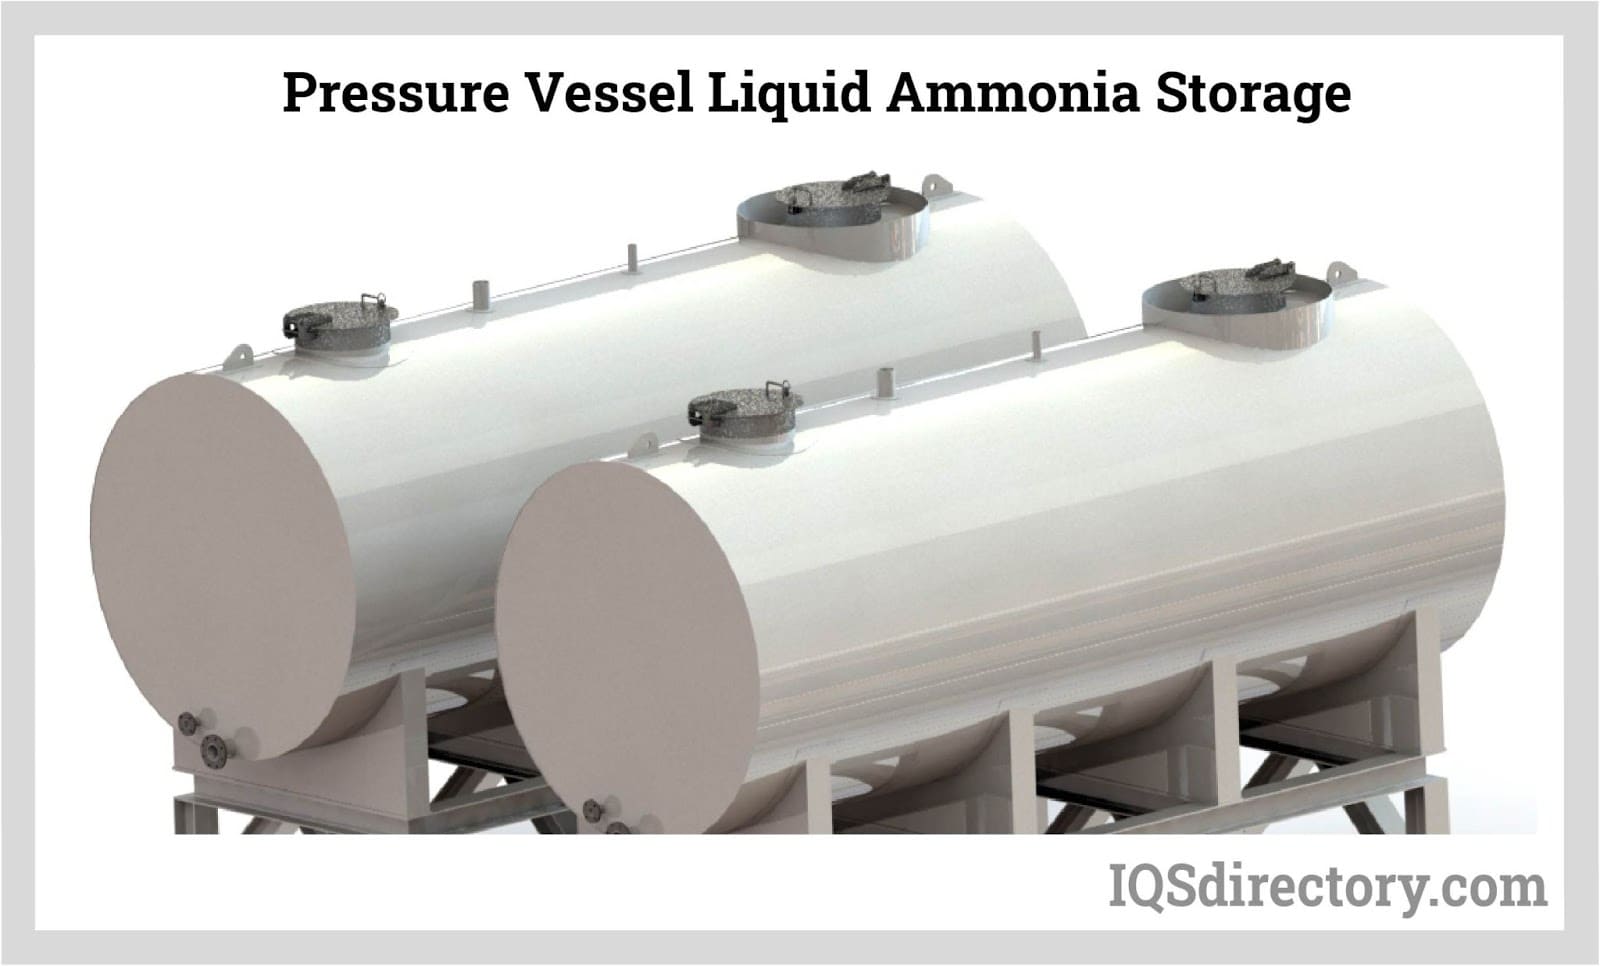 Pressure Vessel Liquid Ammonia Storage